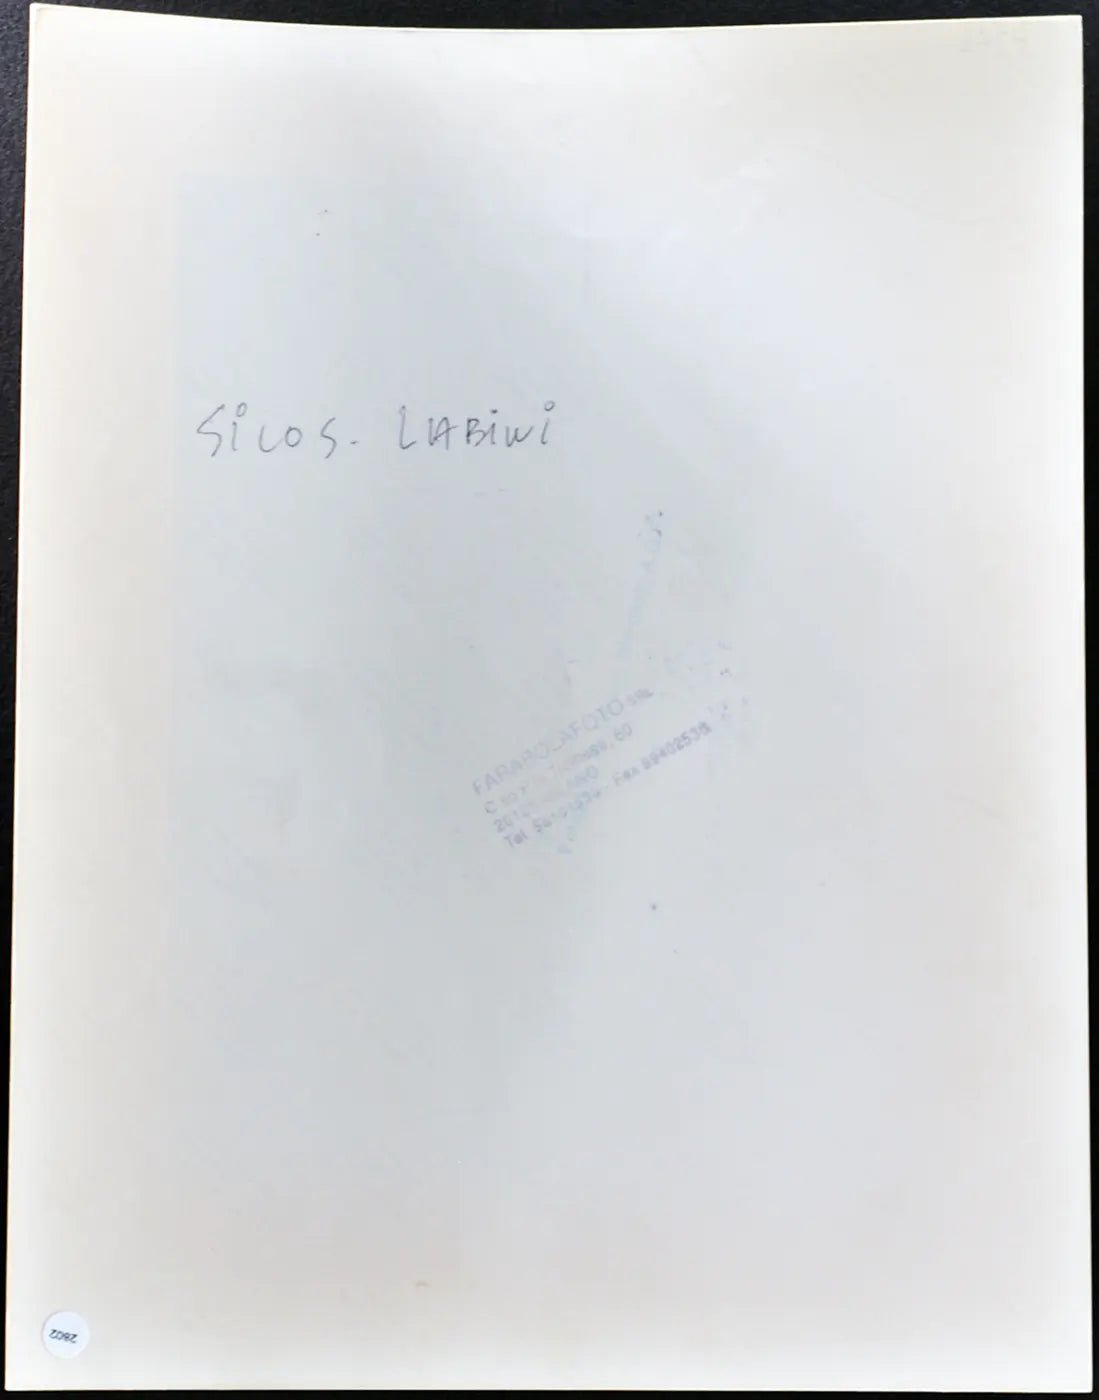 Sylos Labini 1990 Ft 2802 - Stampa 24x30 cm - Farabola Stampa ai sali d'argento